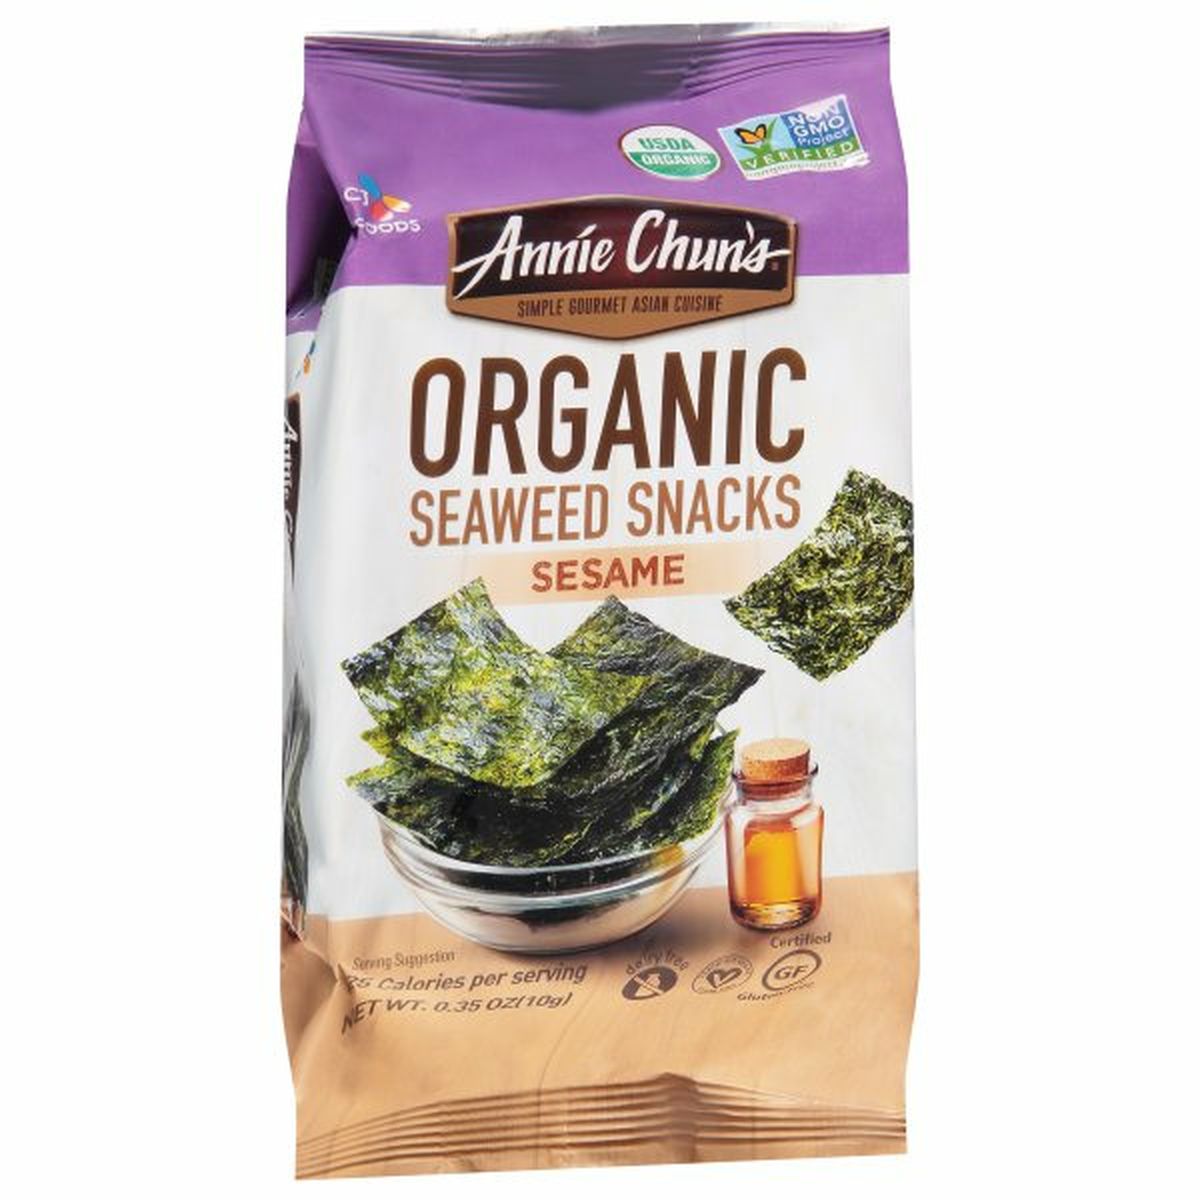 Calories in Annie Chuns Seaweed Snacks, Organic, Sesame